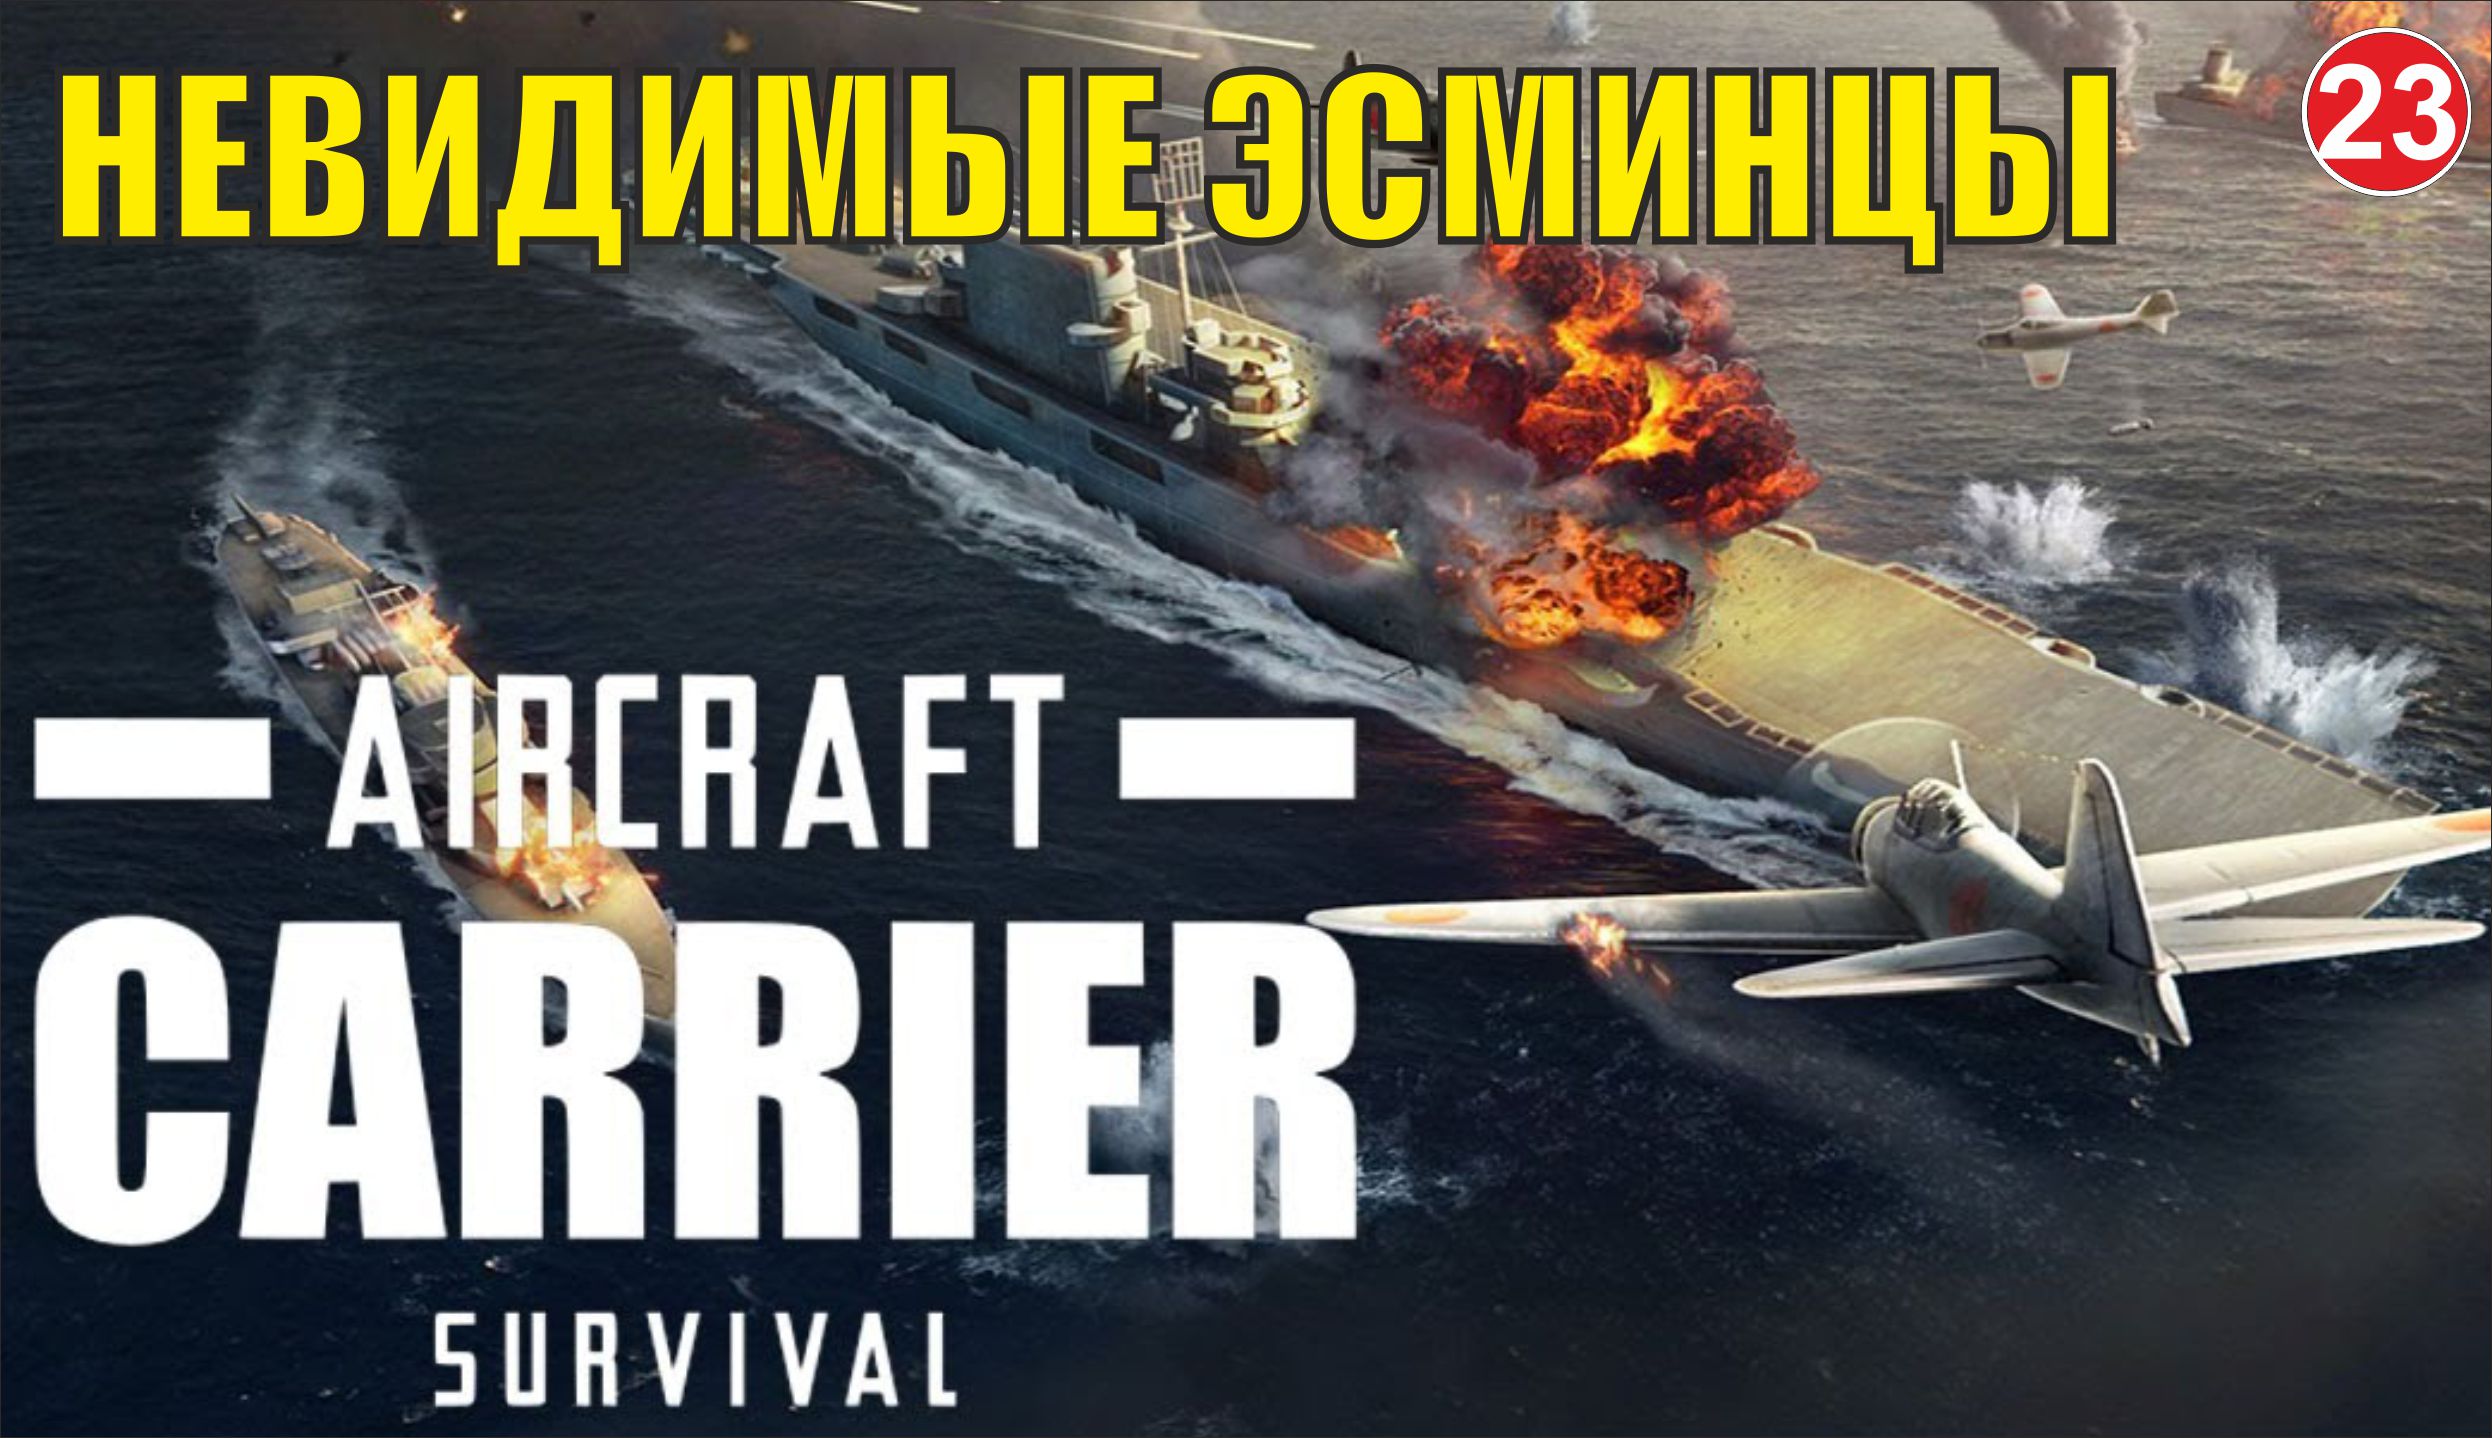 Aircraft Carrier Survival - Невидимые эсминцы